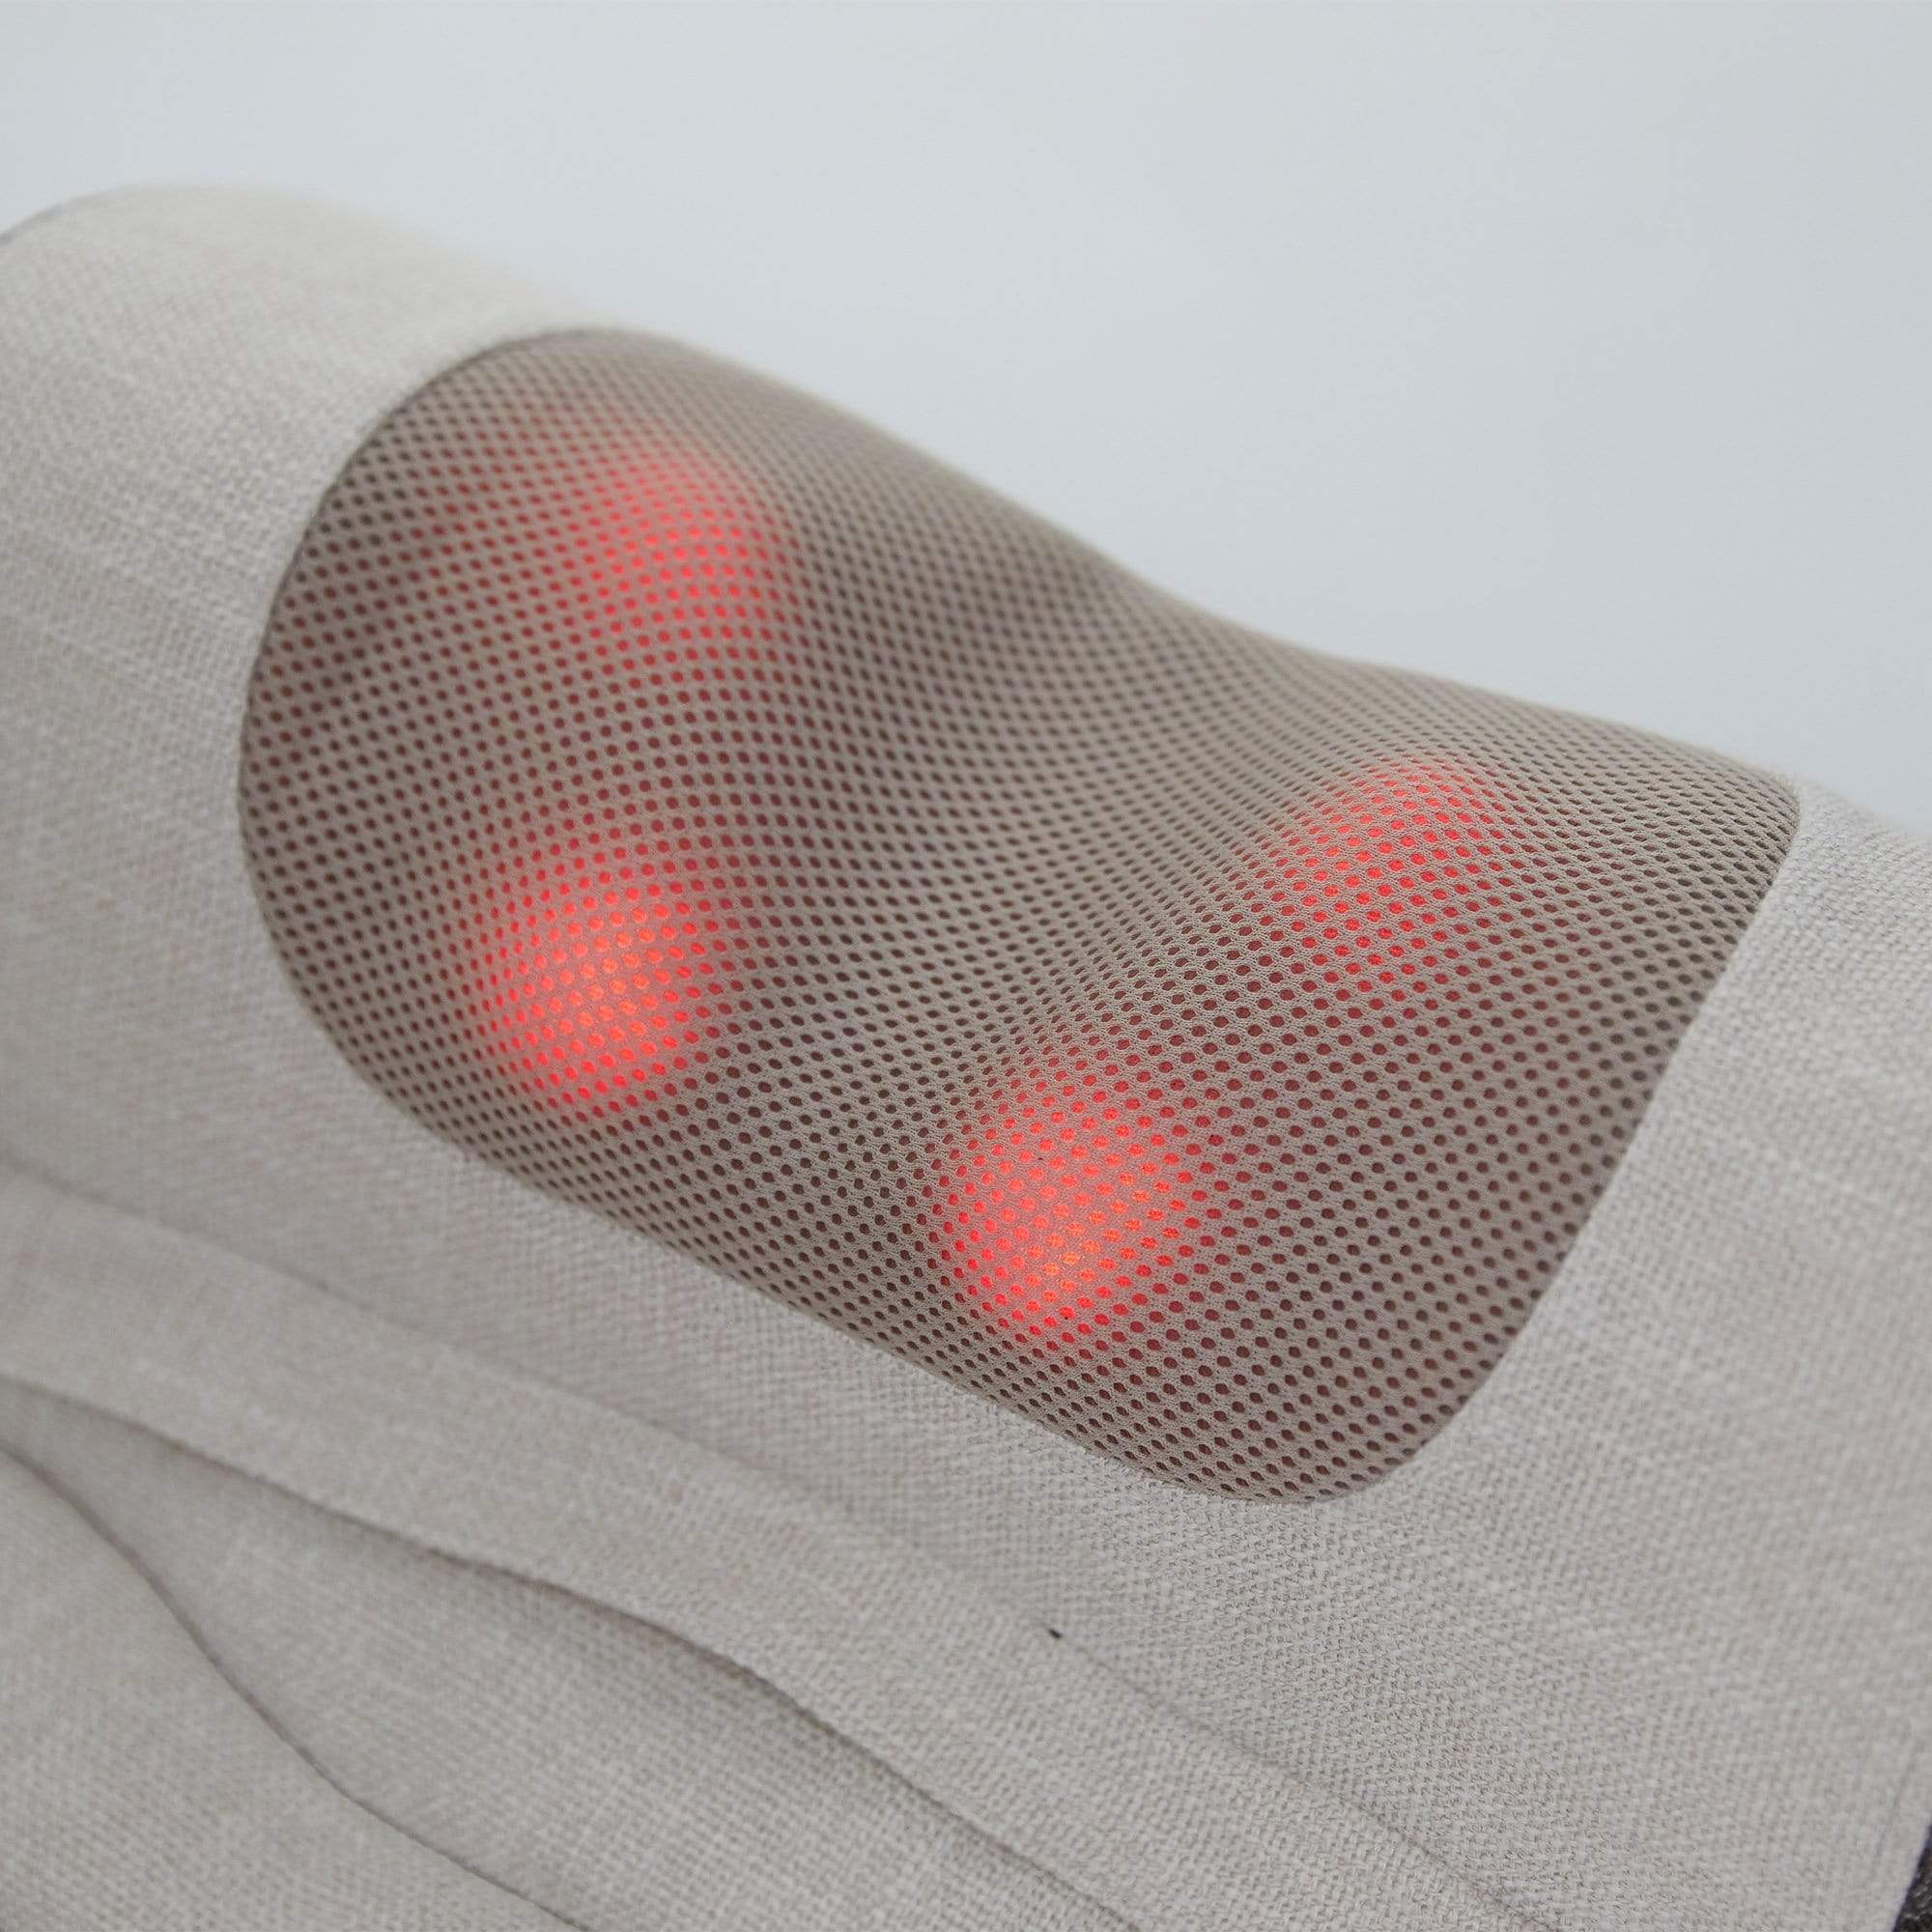 iPuffy-Premium 3D Heated Lumbar Massager